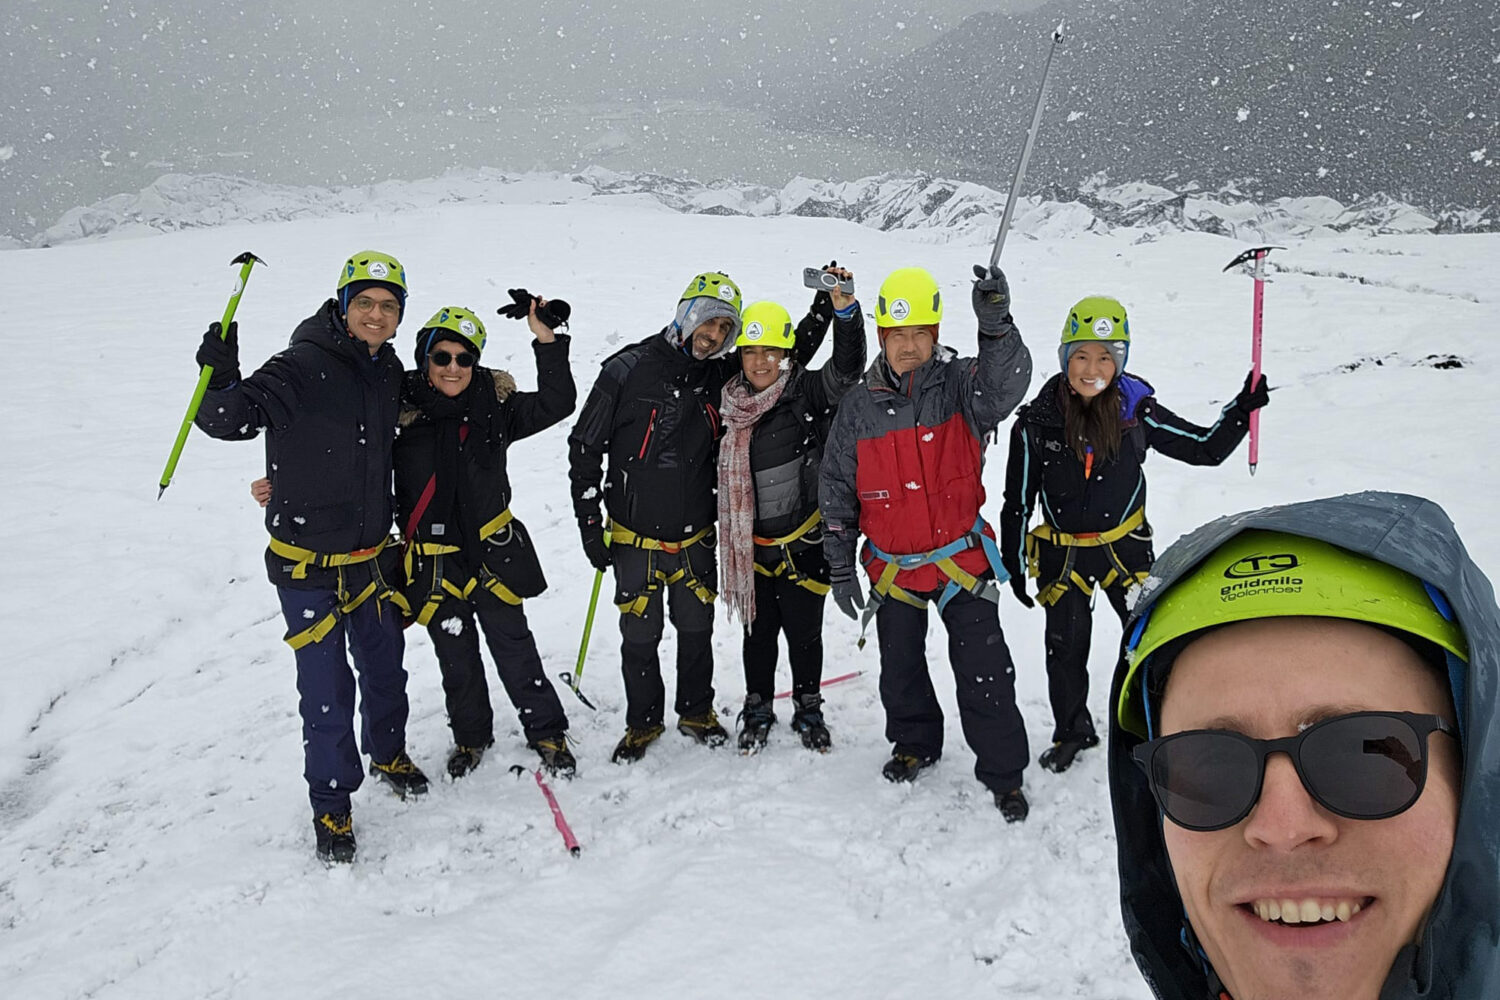 People taking a selfie on the glacier as it is snowing.